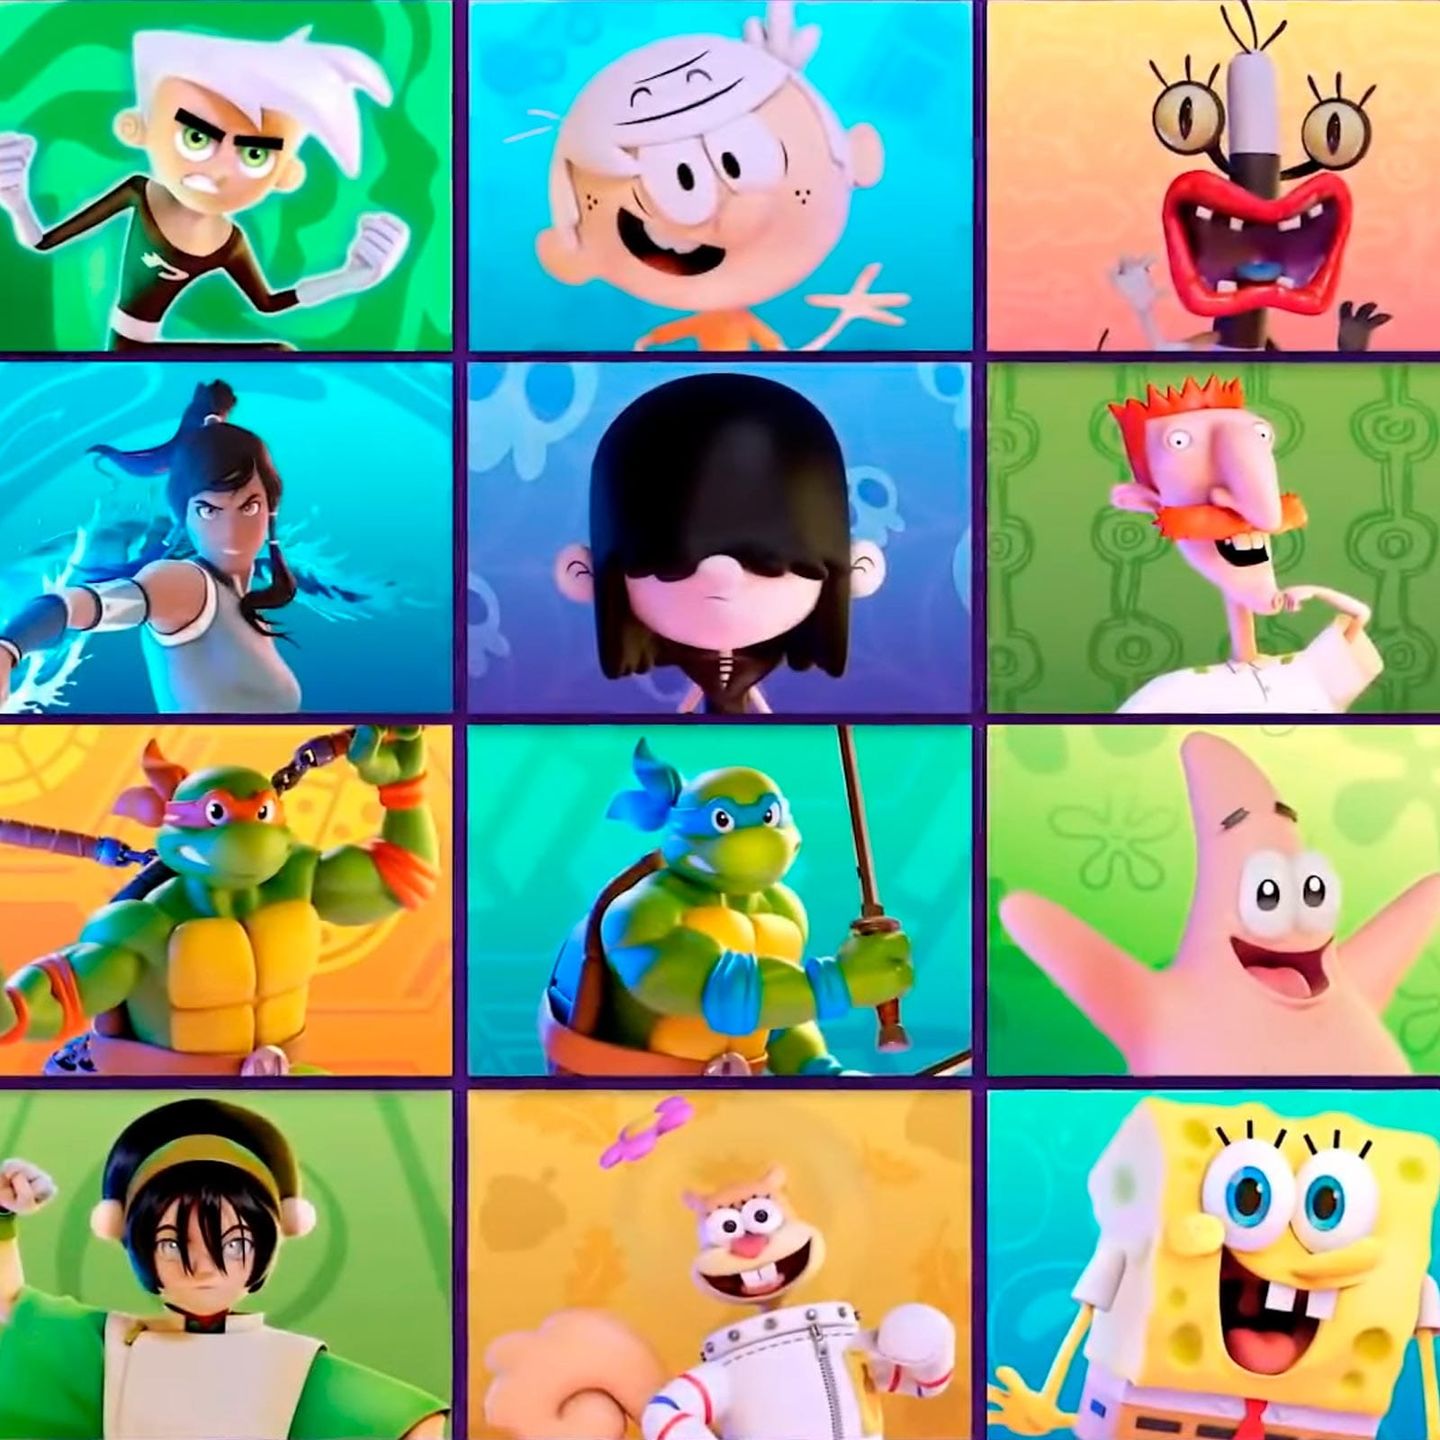 Файтинг Nickelodeon All-Star Brawl: редакция 2х2.медиа рассказывает о любимых бойцах